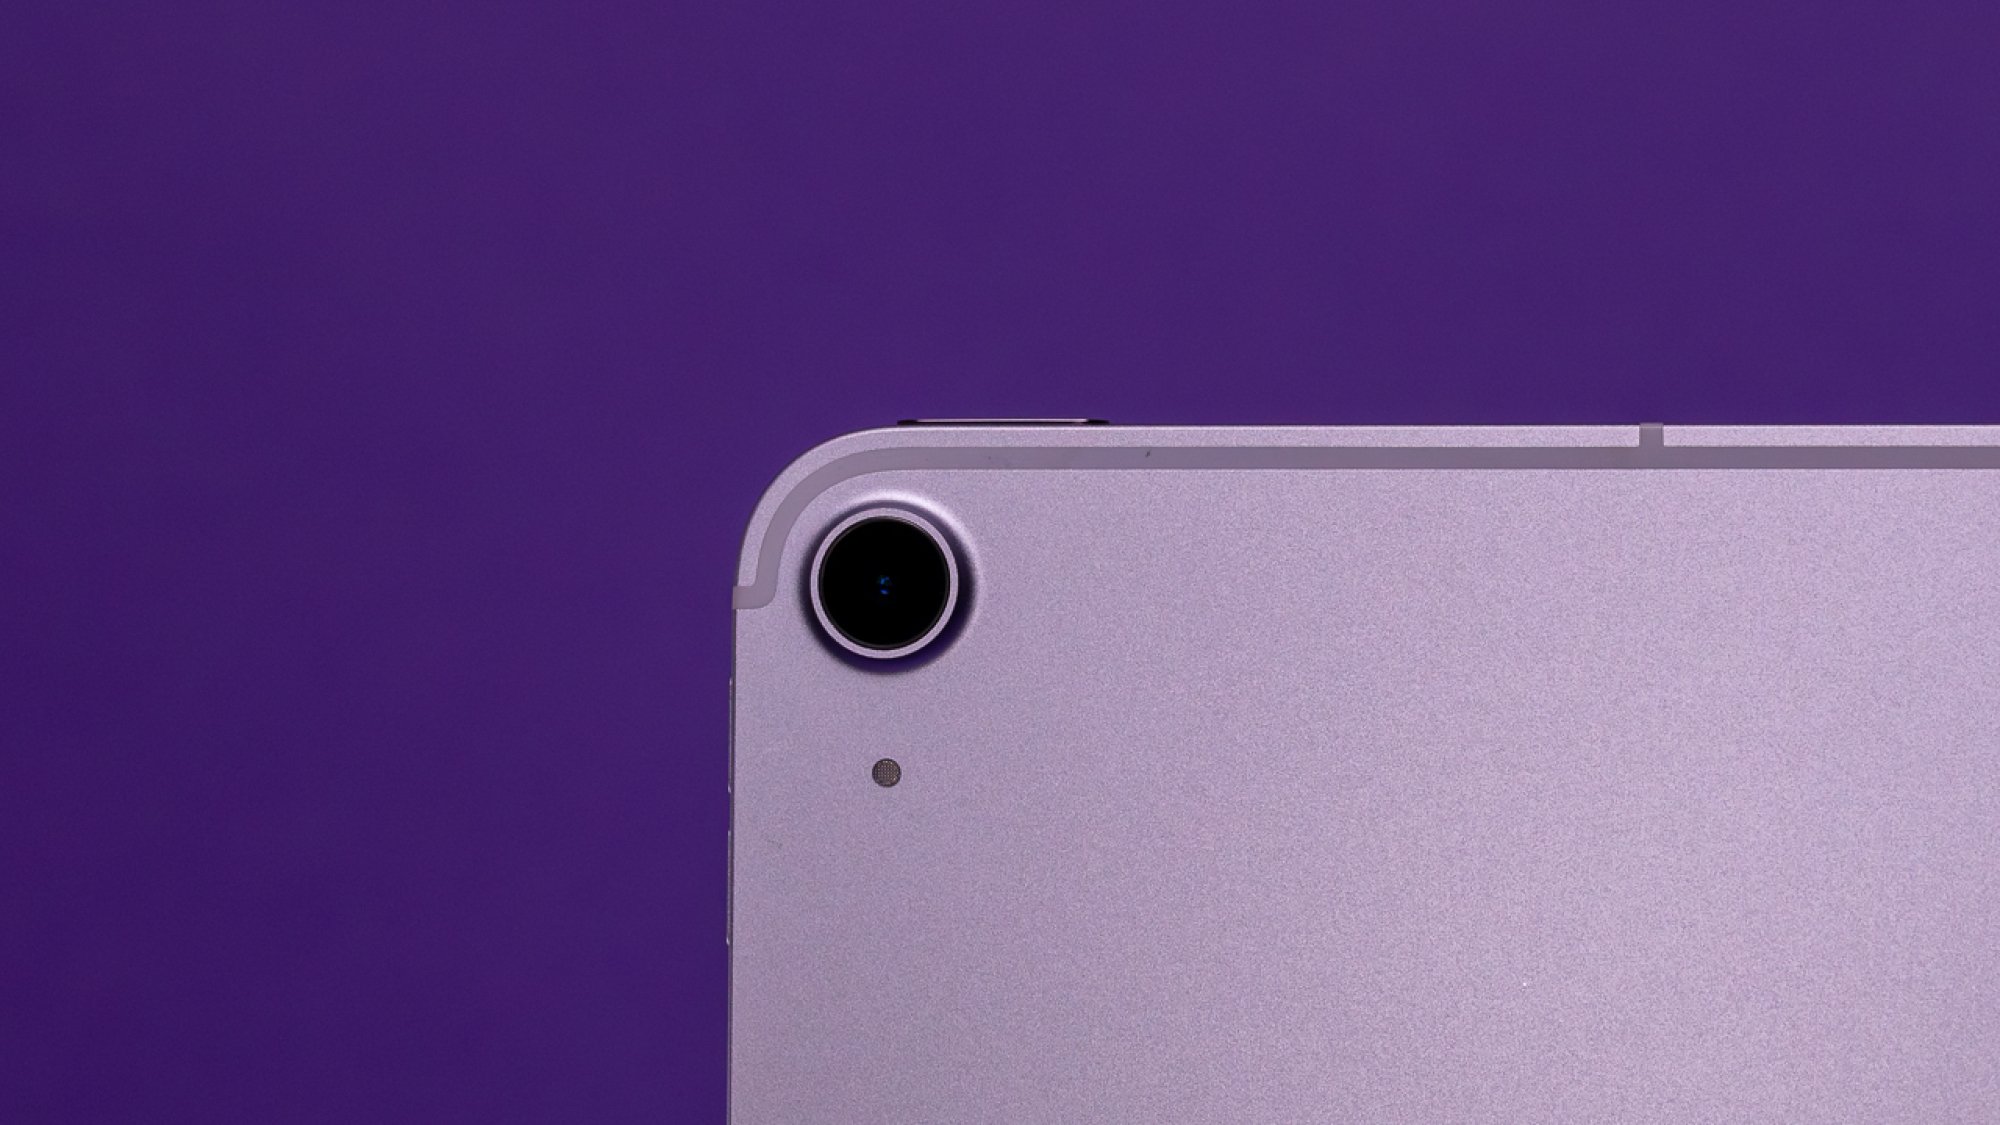 13-inch iPad Air camera against purple background